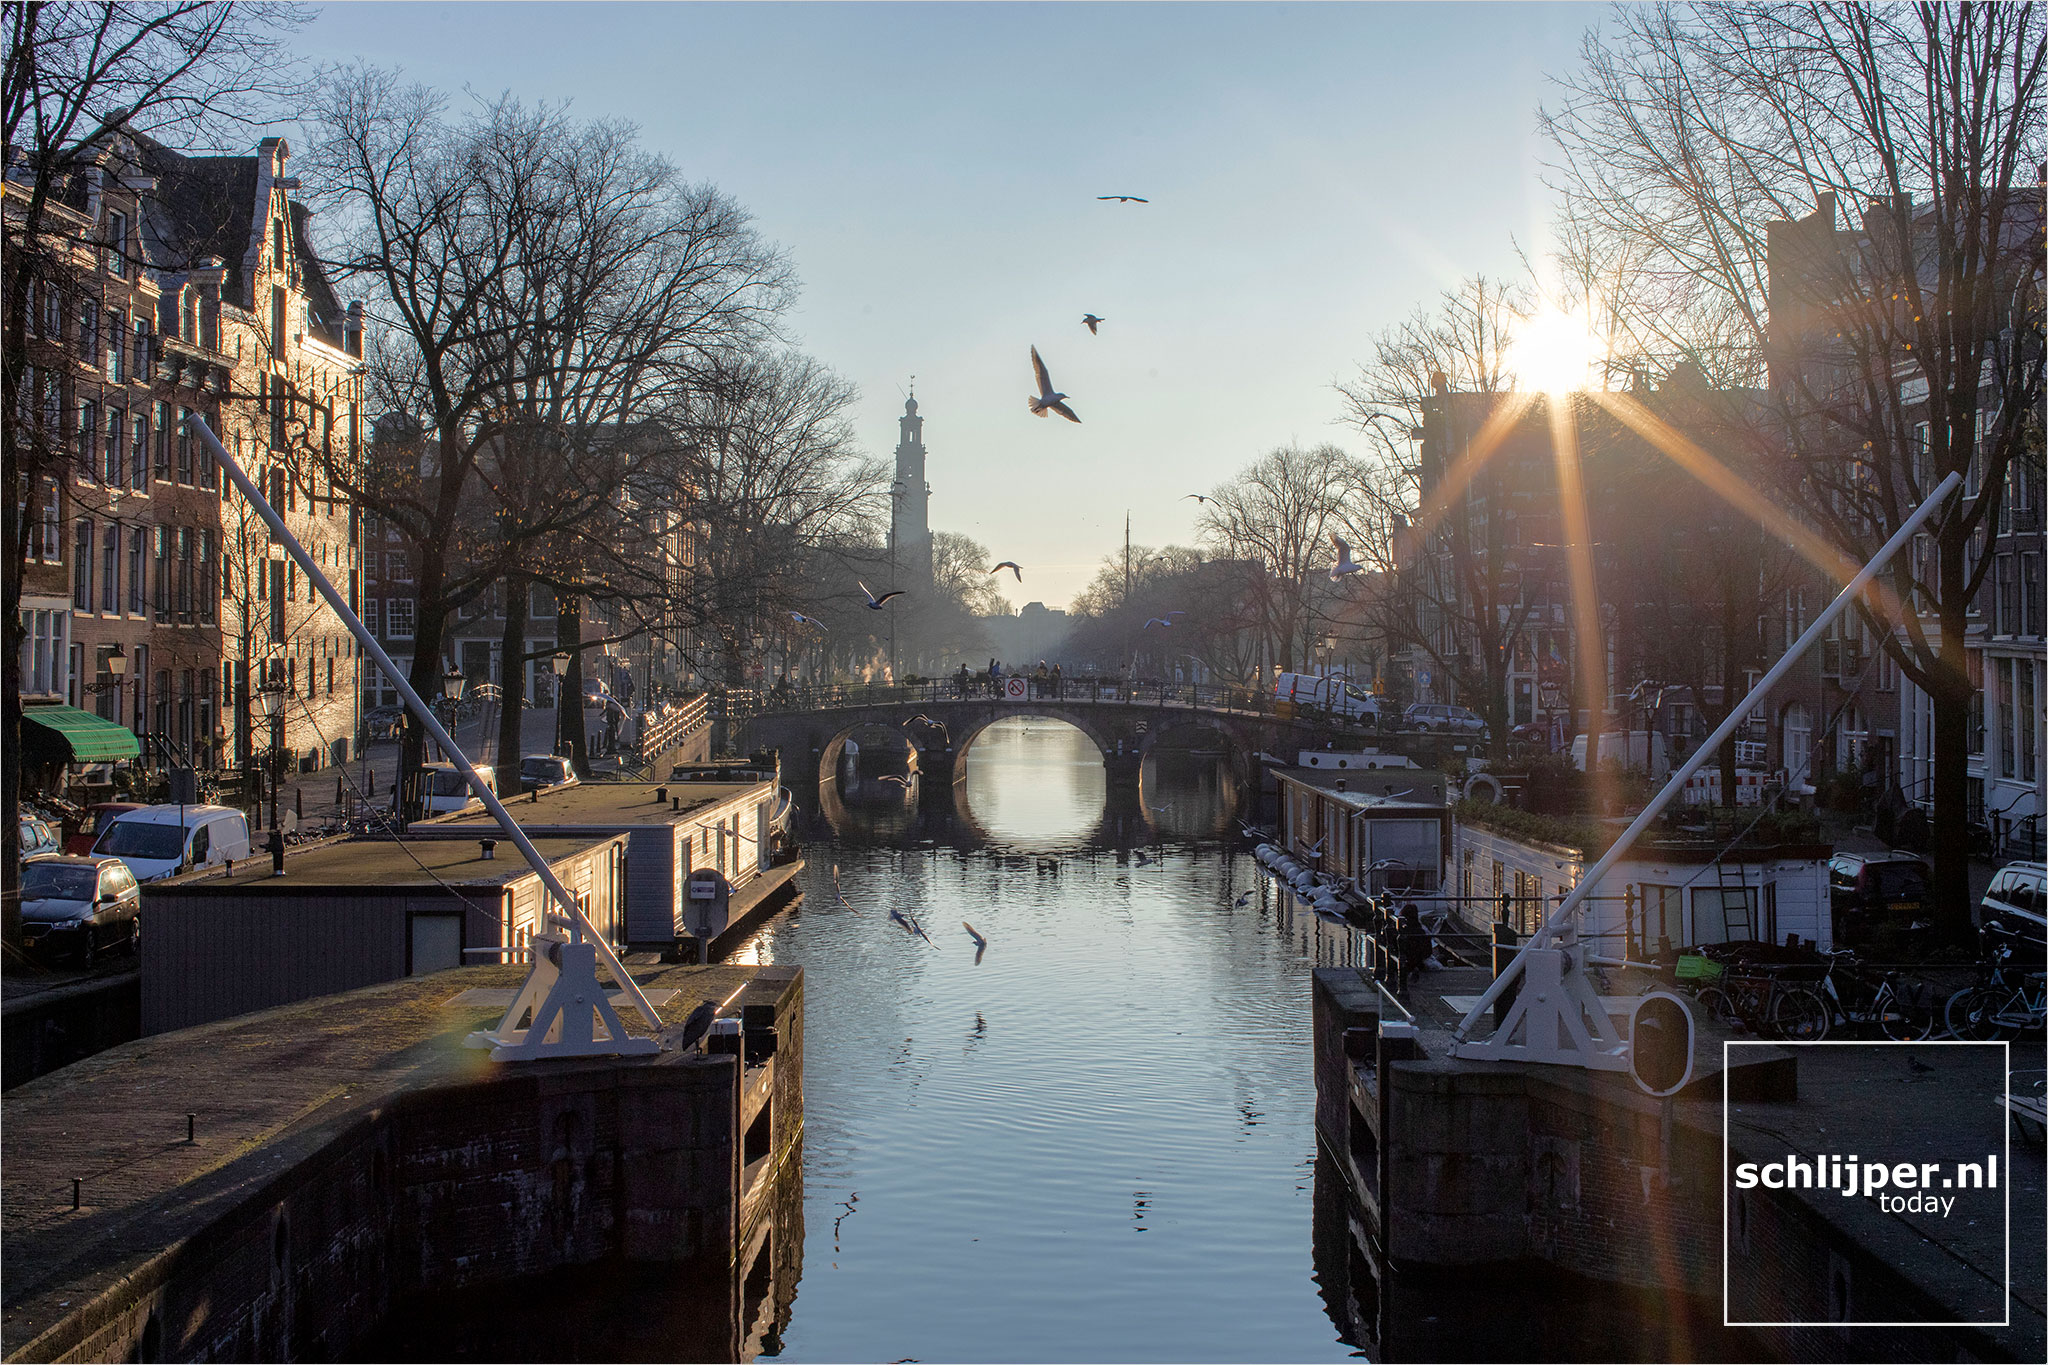 The Netherlands, Amsterdam, 10 december 2020